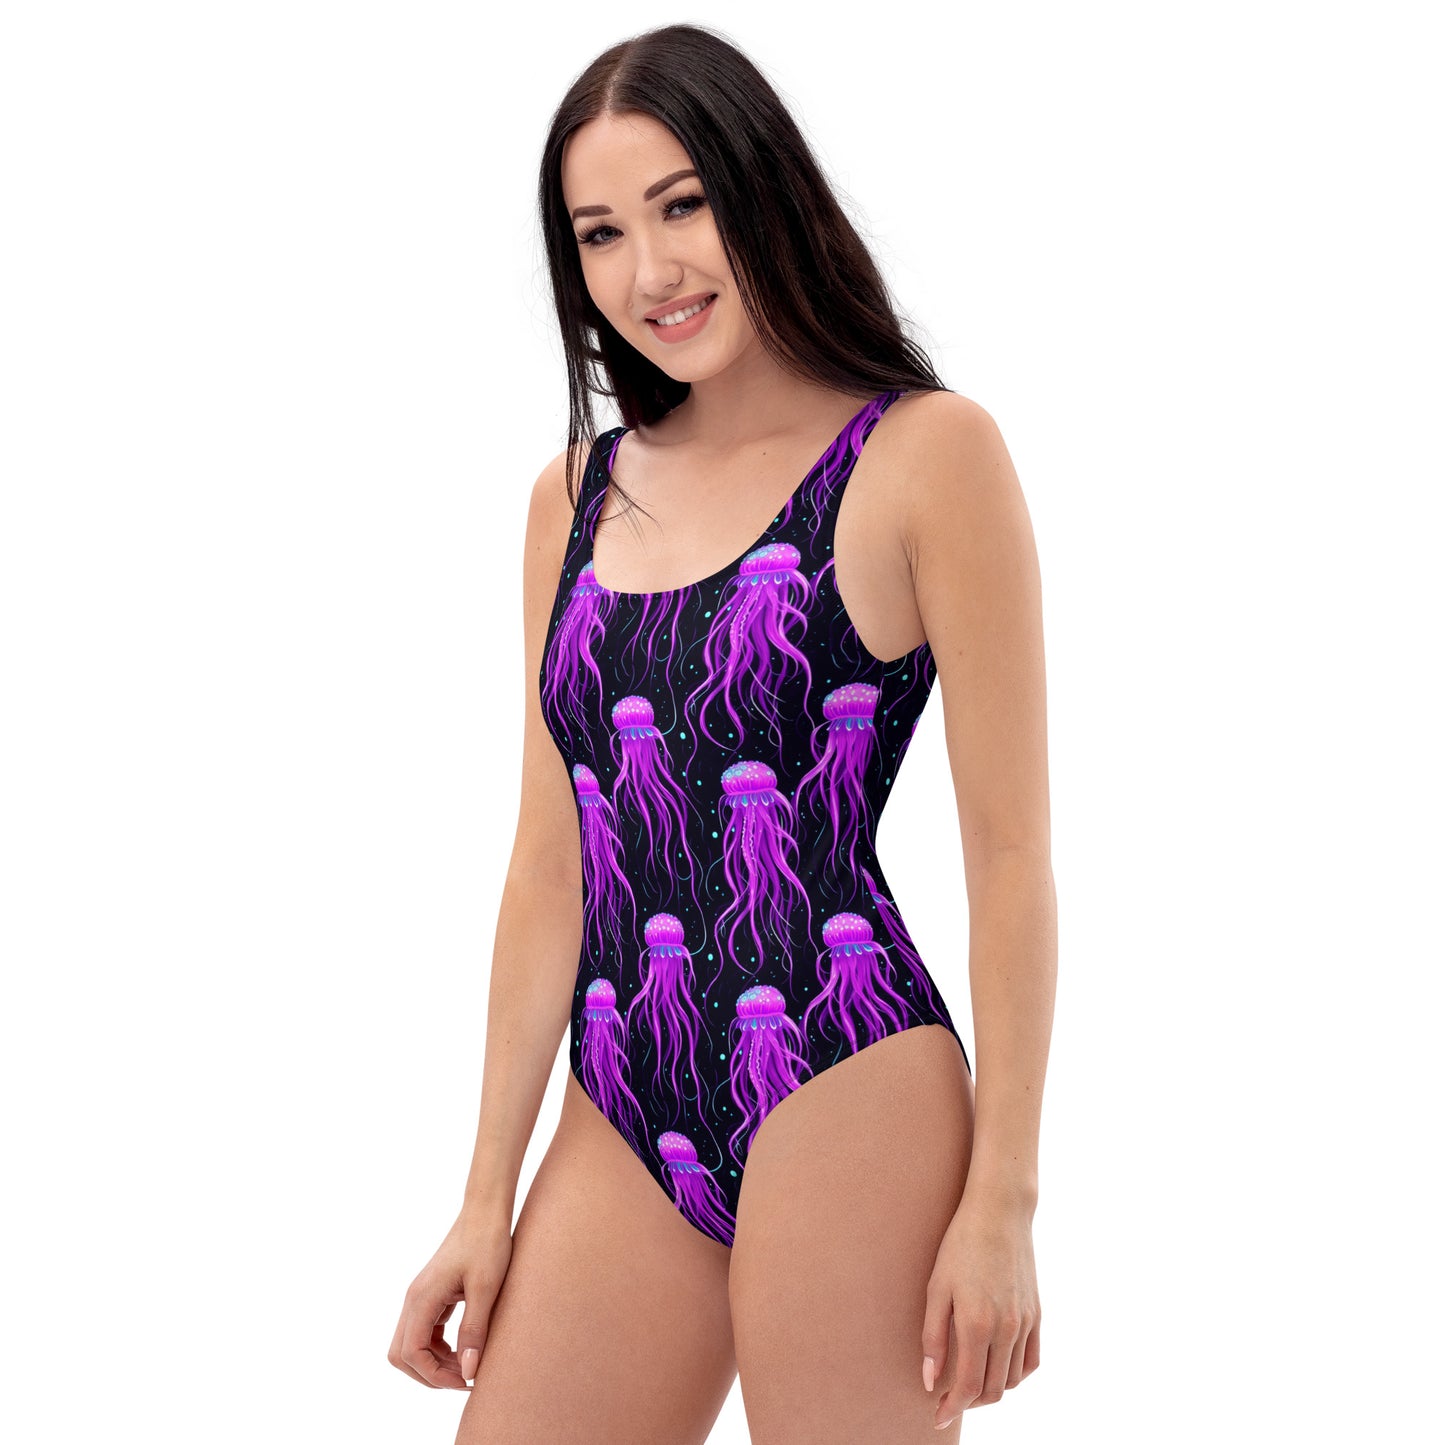 Neon Punk Jellyfish One-Piece Swimsuit